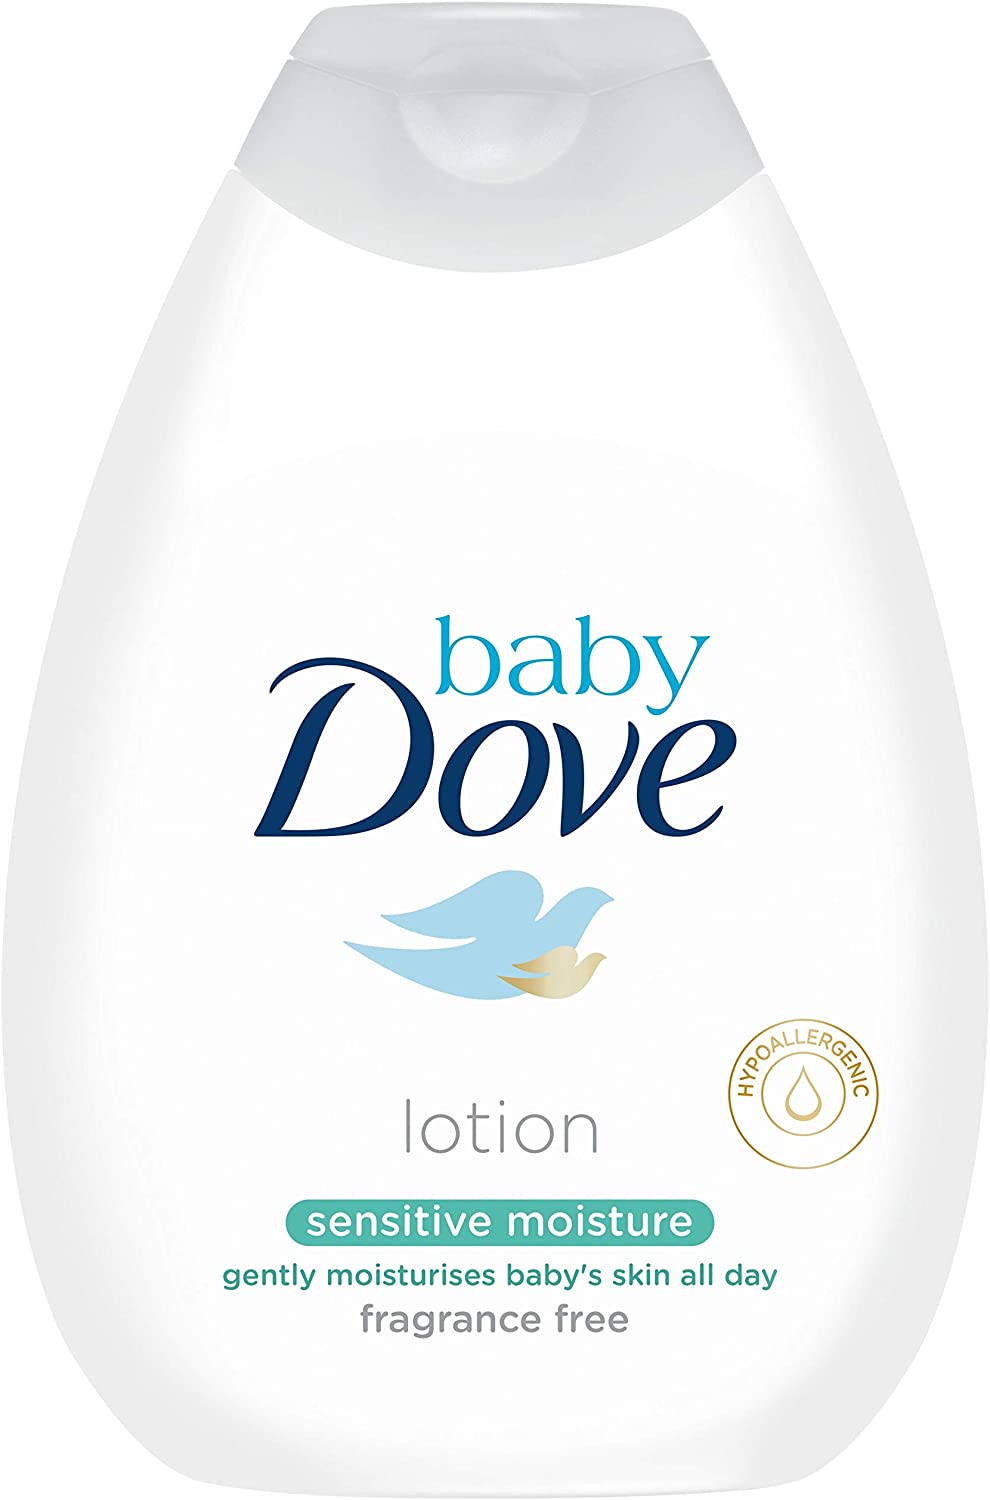 https://www.amazon.co.uk/Dove-Sensitive-Baby-Lotion-400/dp/B07G5LGS3B/?tag=tatmos-21